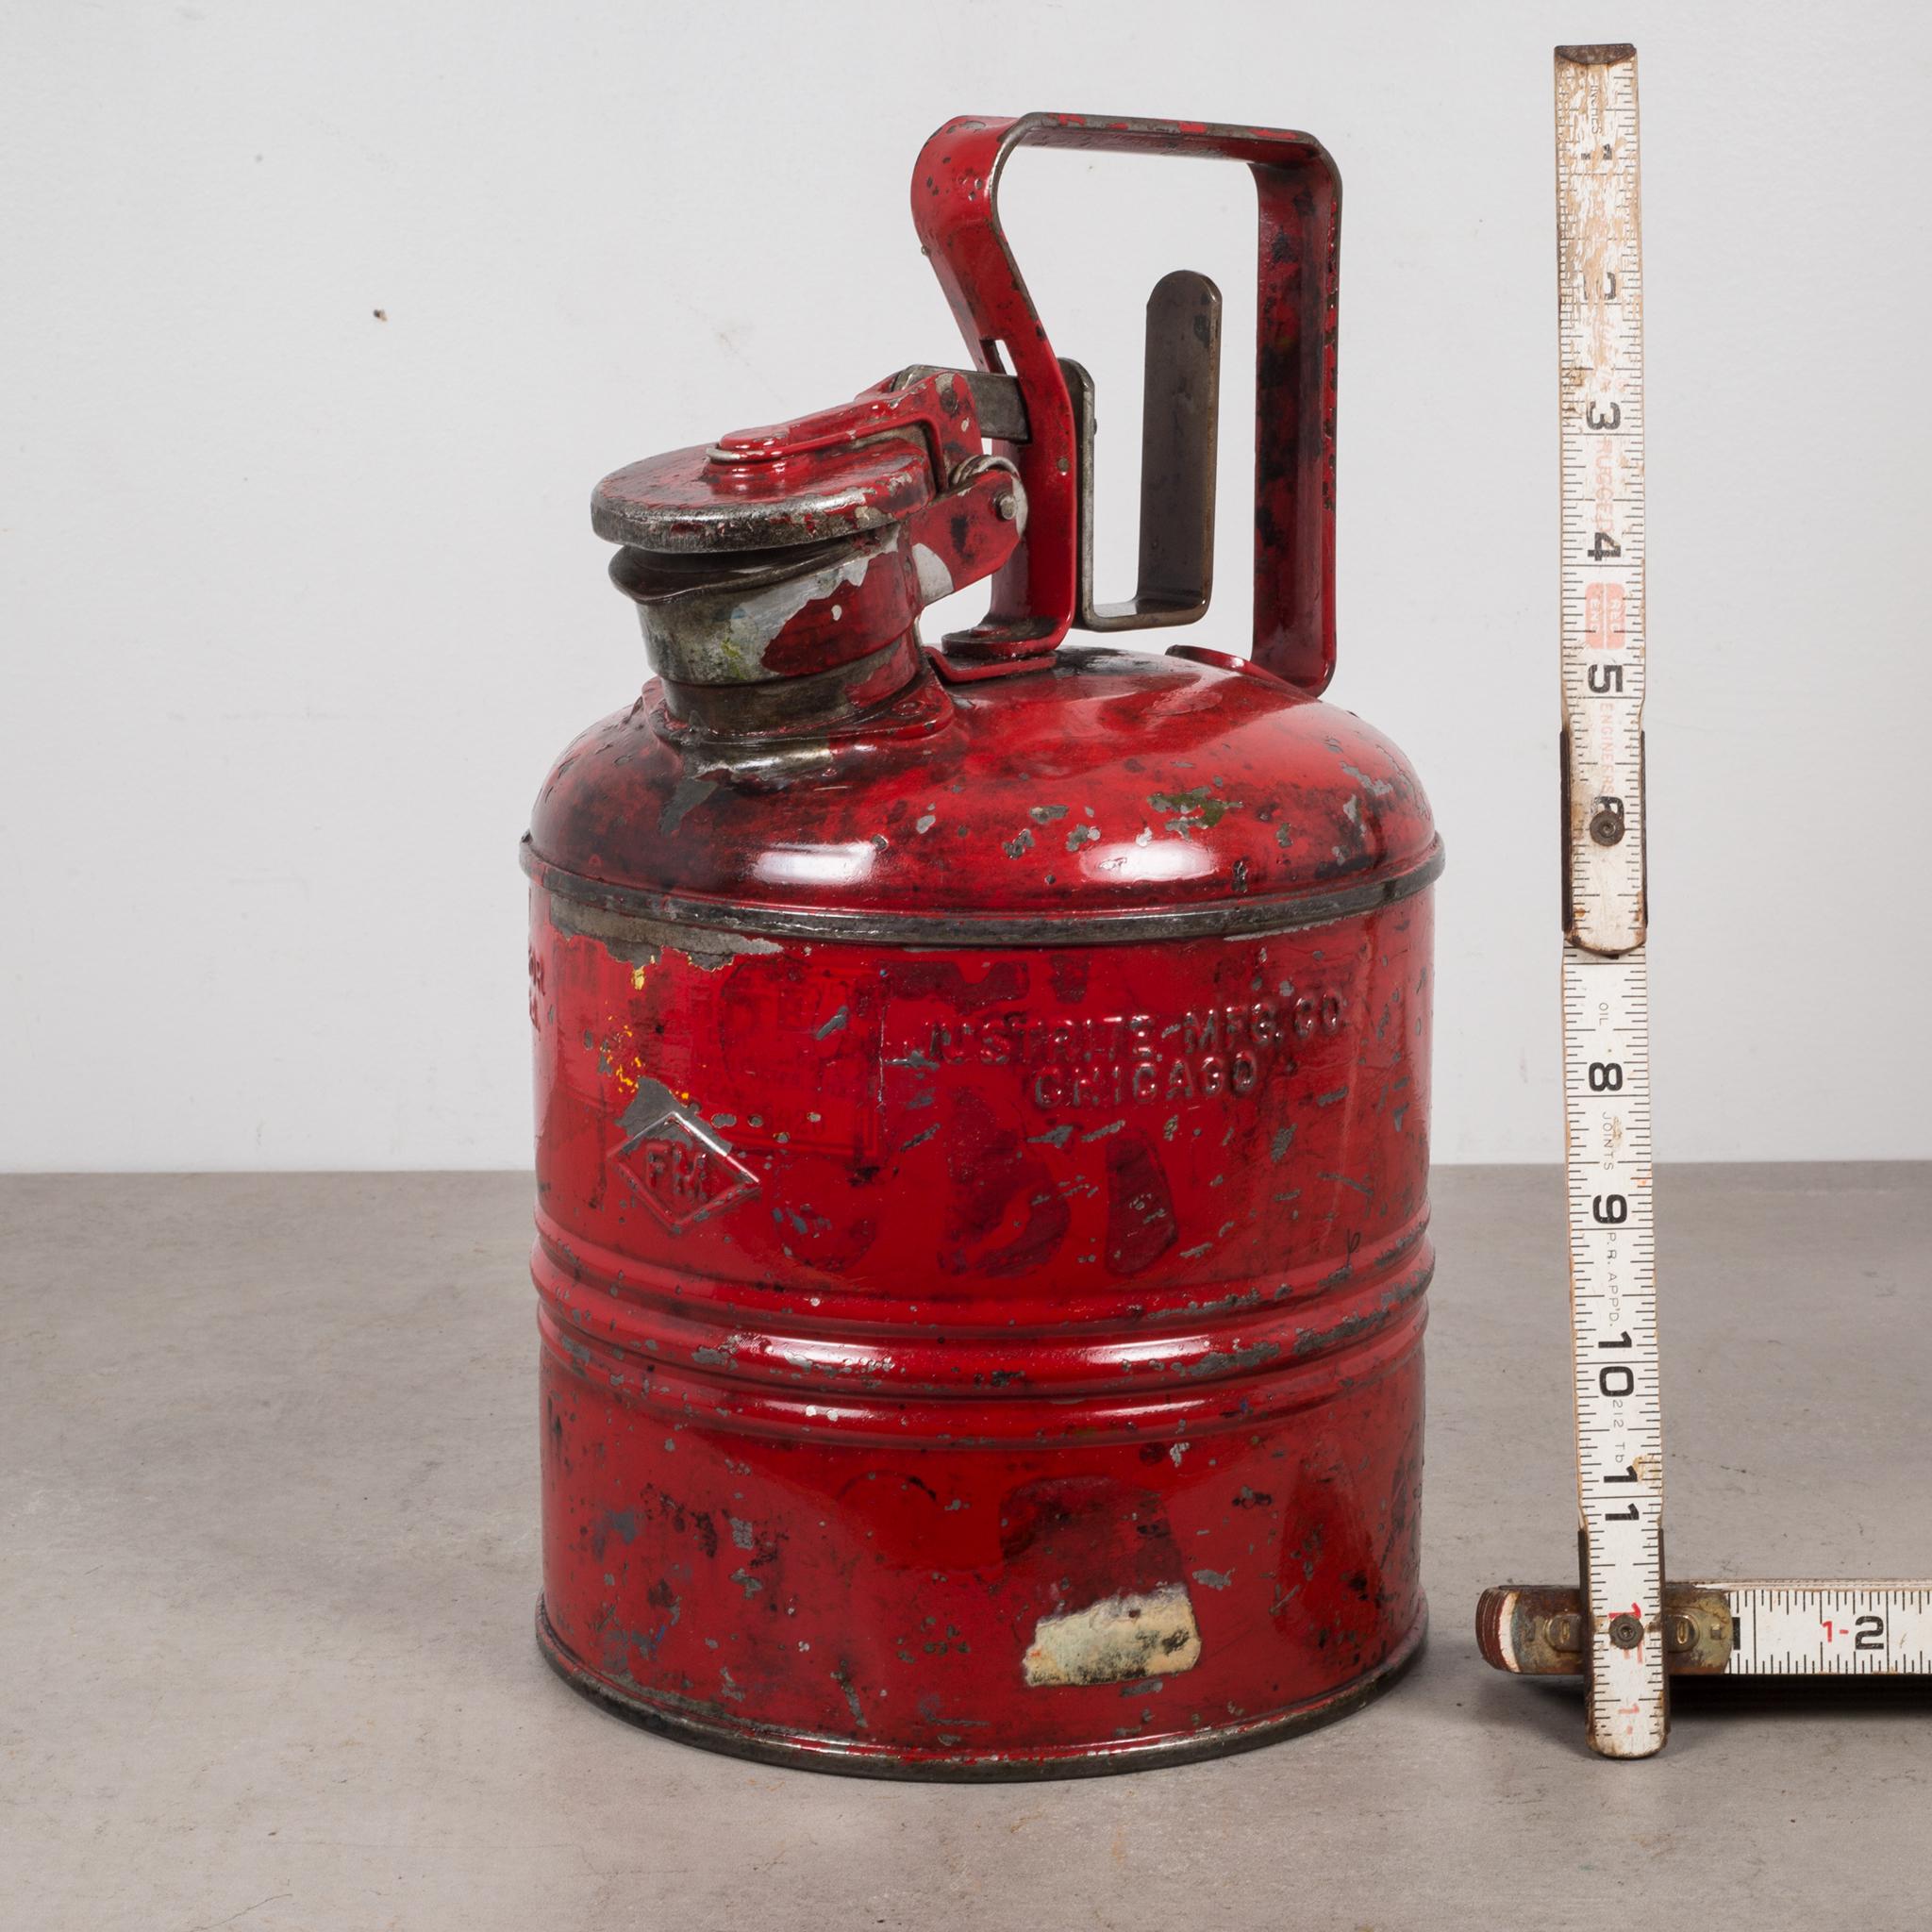 Metal Vintage Safety Gas Can, circa 1940